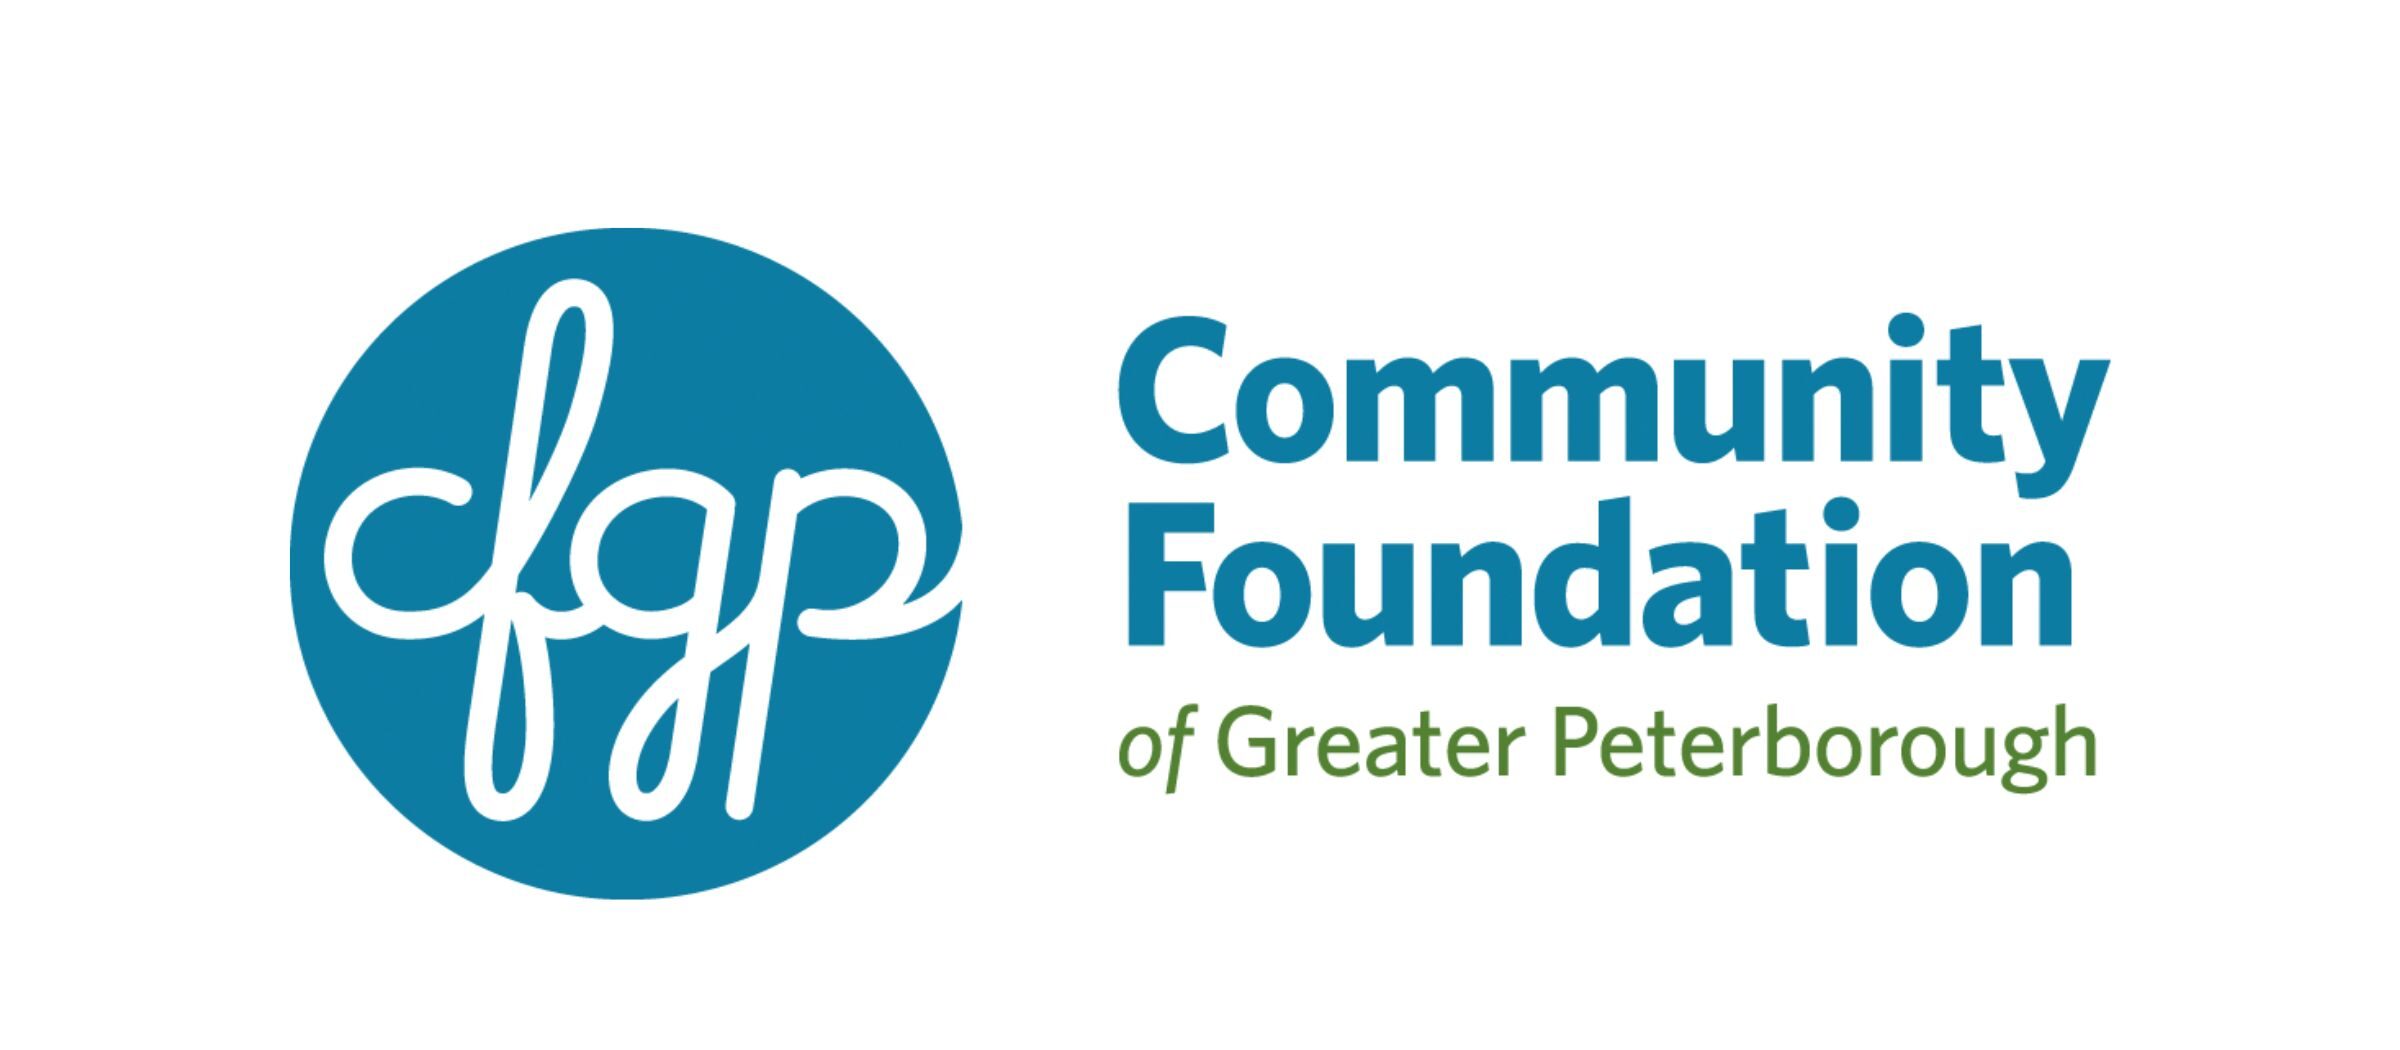 Community Foundation of Greater Peterborough logo